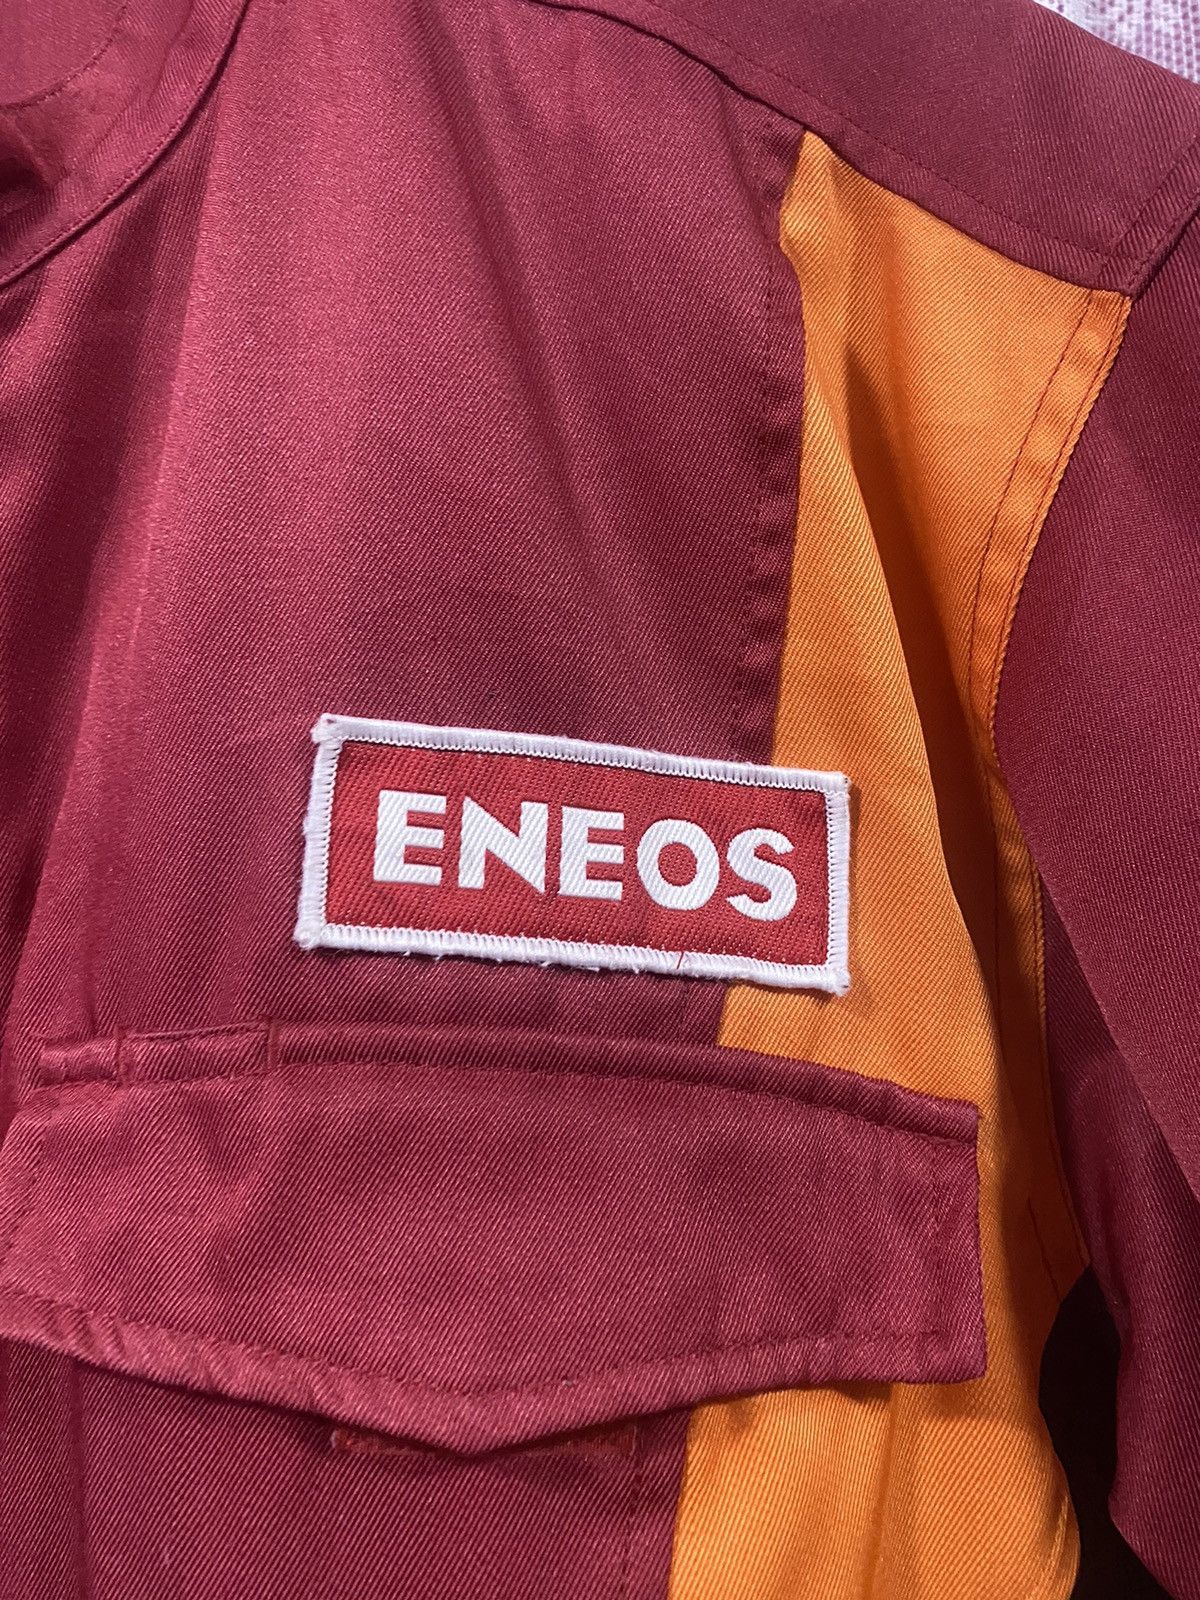 Vintage Eneos Overalls Jumpsuit - 5